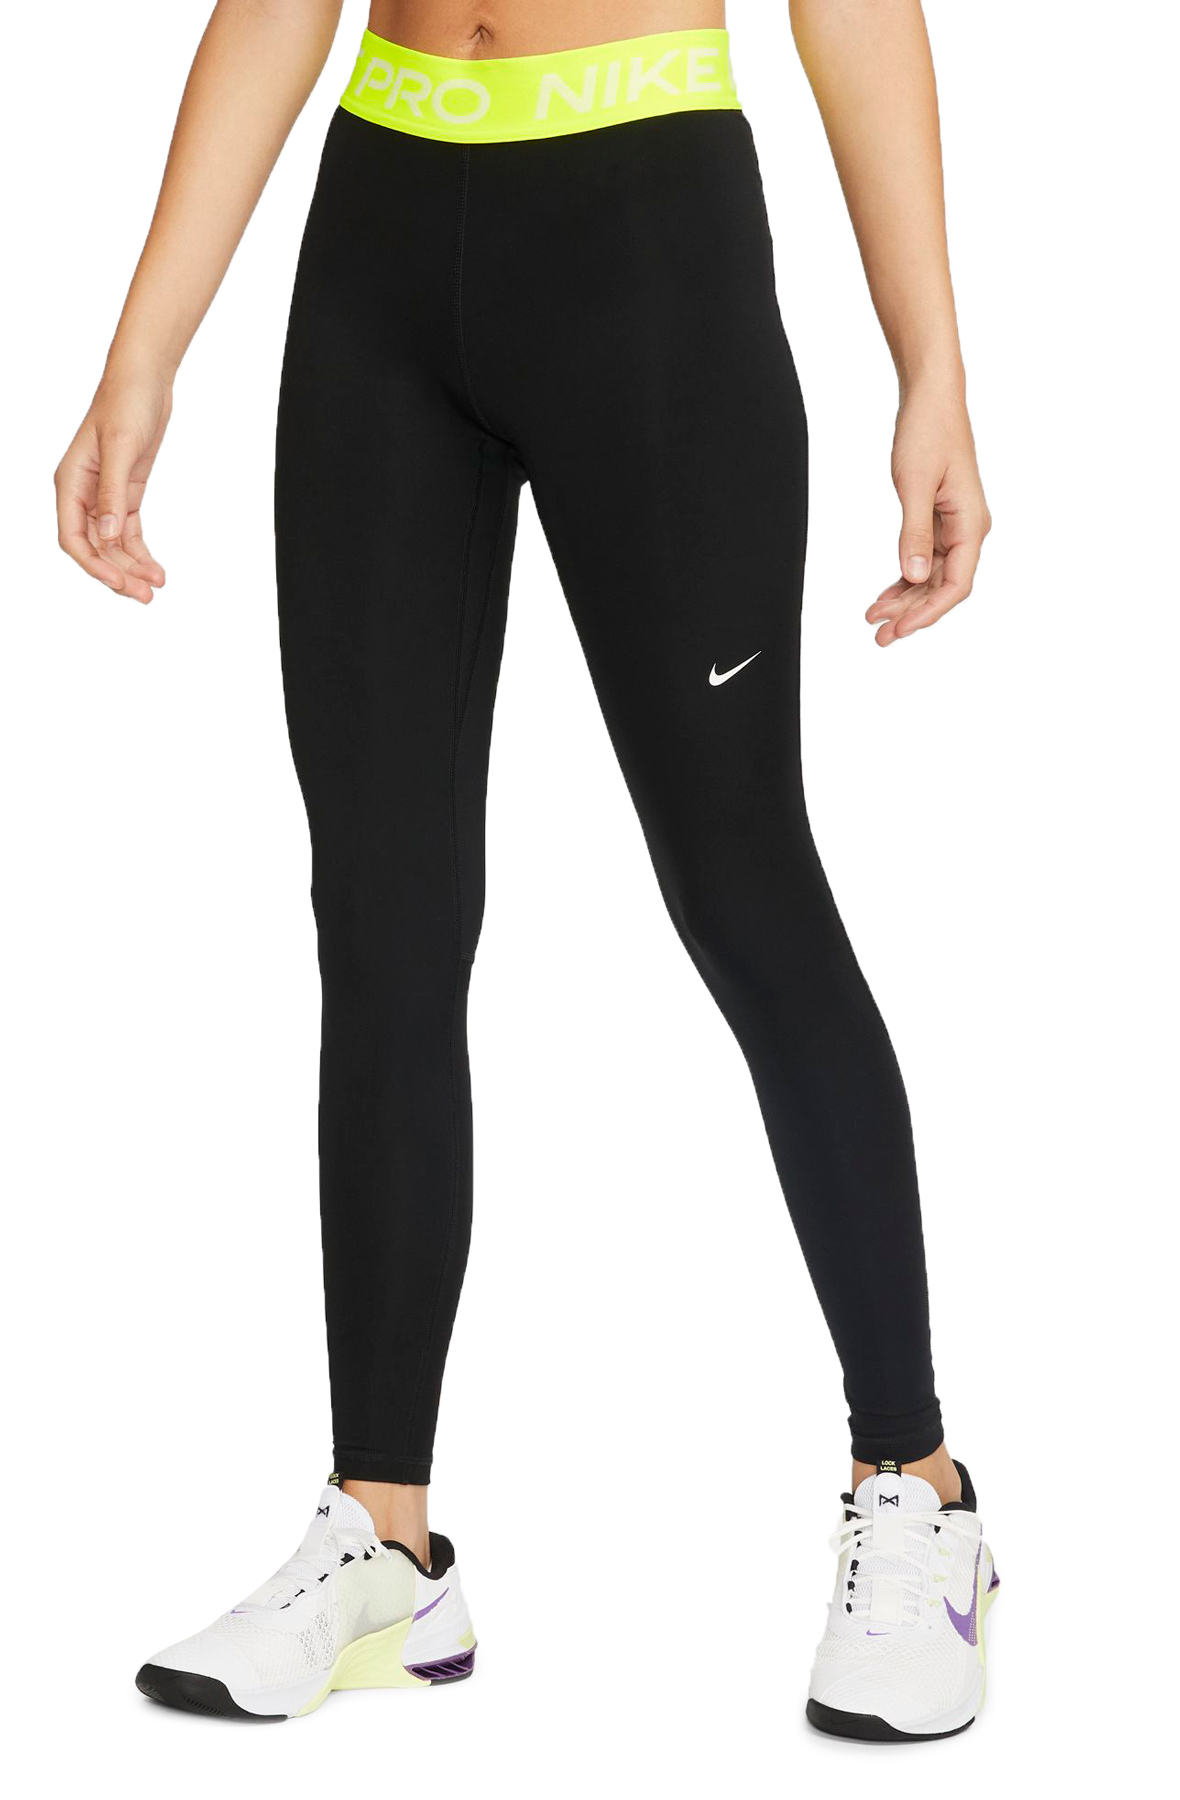 Nike Womens Pro Tights - Black/White, Sportsmart